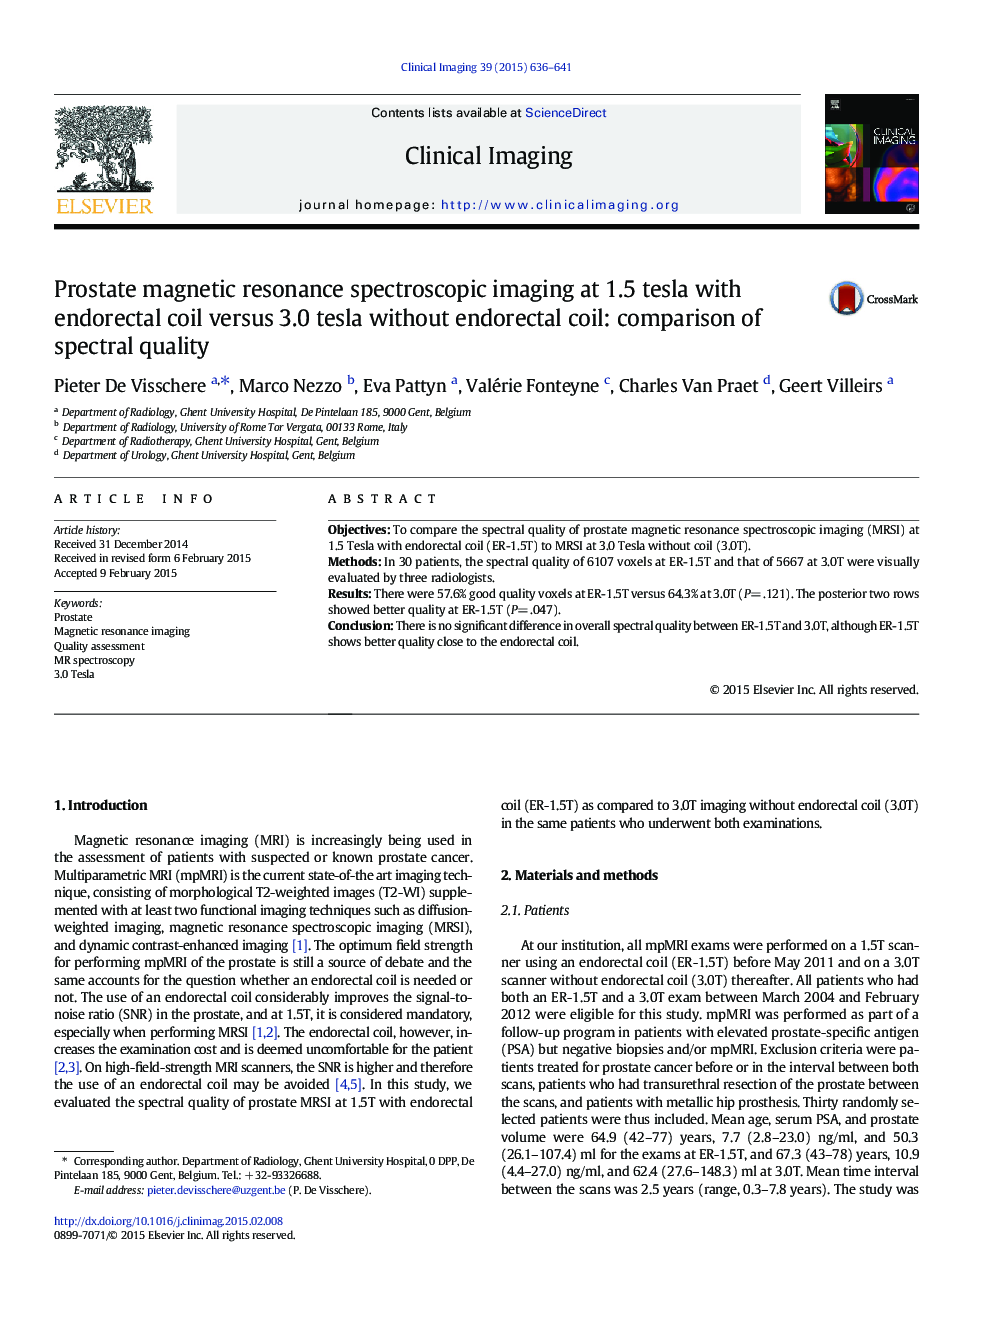 Prostate magnetic resonance spectroscopic imaging at 1.5 tesla with endorectal coil versus 3.0 tesla without endorectal coil: comparison of spectral quality